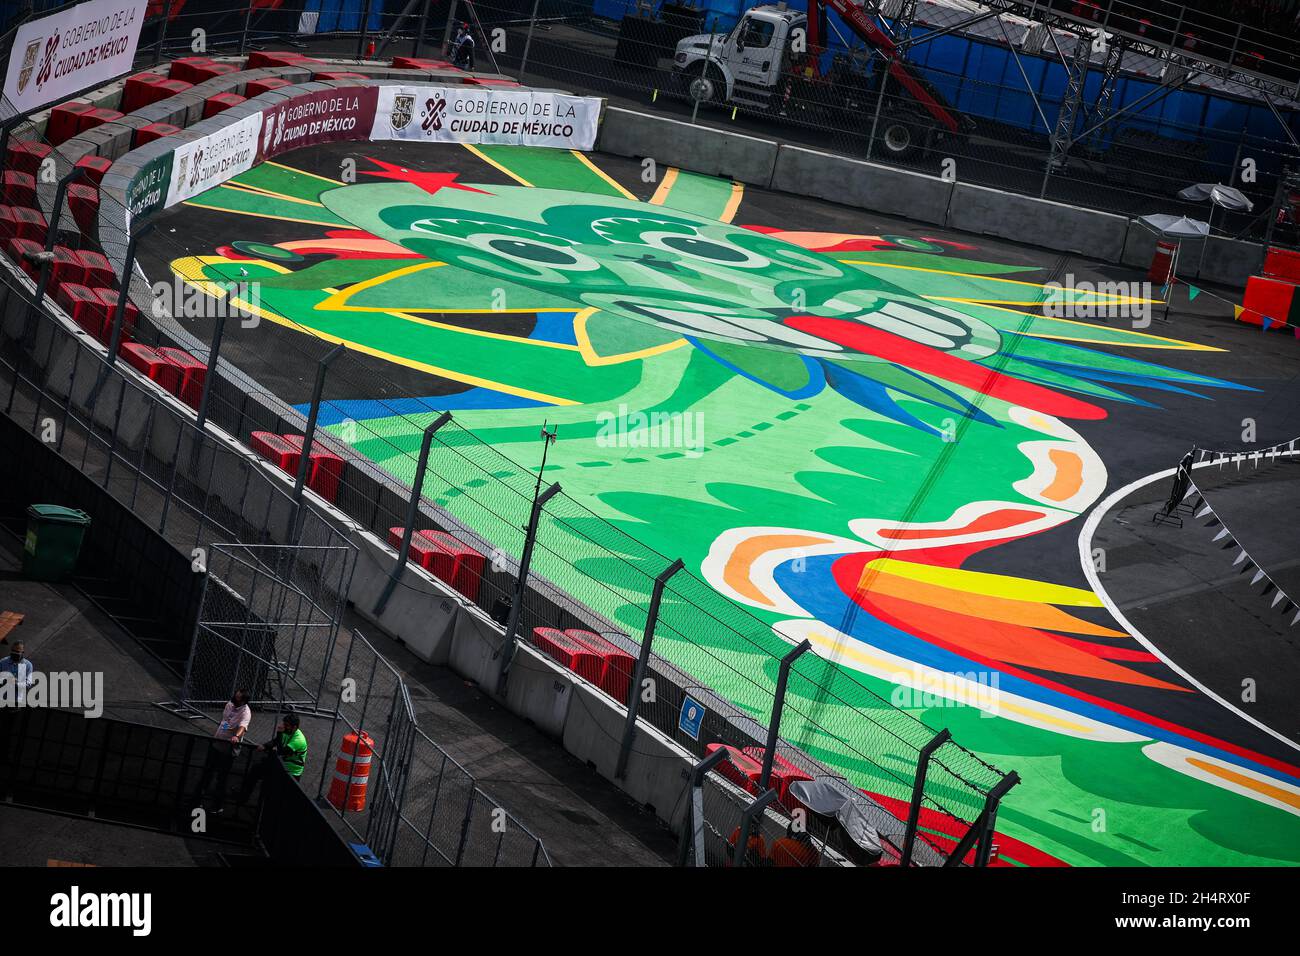 Paintings on the track during the Formula 1 Gran Premio De La Ciudad De Mexico  2021, Mexico City Grand Prix, 18th round of the 2021 FIA Formula One World  Championship from November